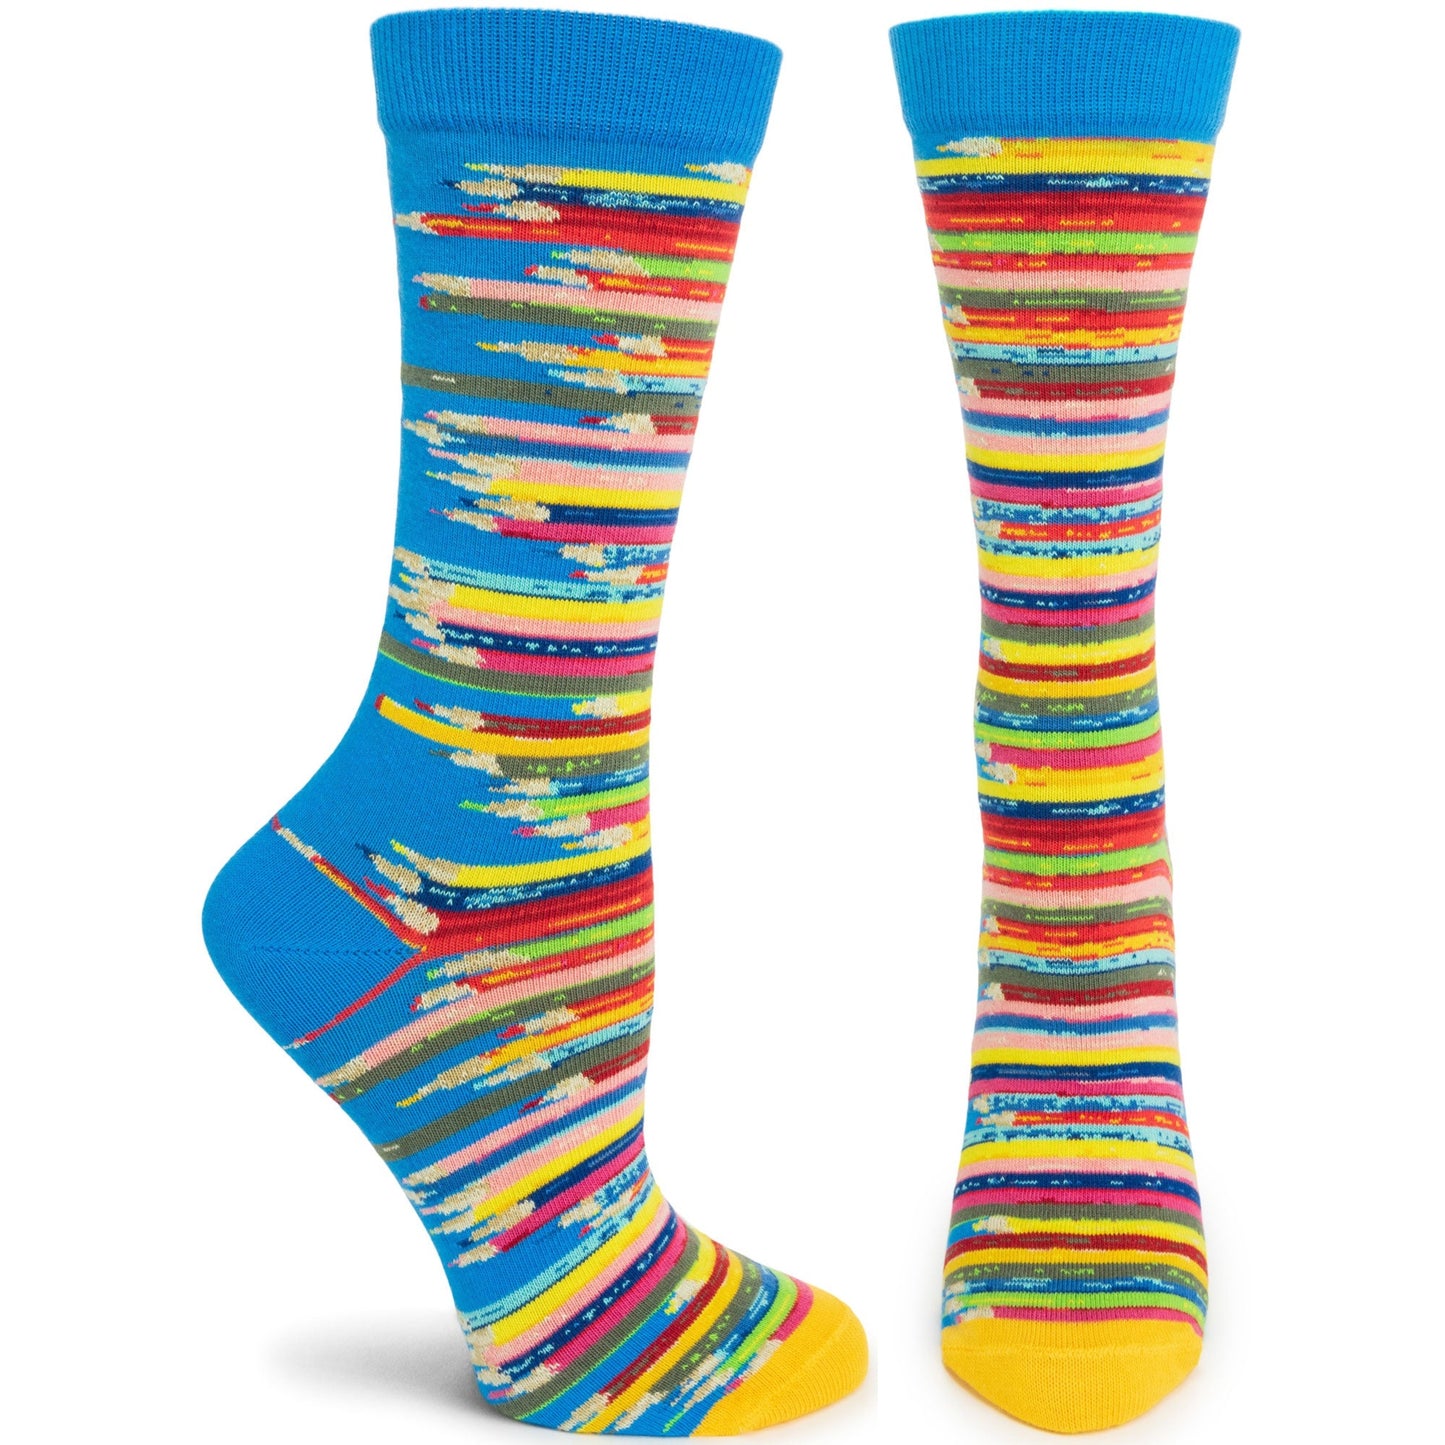 Socktastic Tuesday Sock Bundle - Women's Frank Lloyd Wright Inspired Socks (Set of 3)